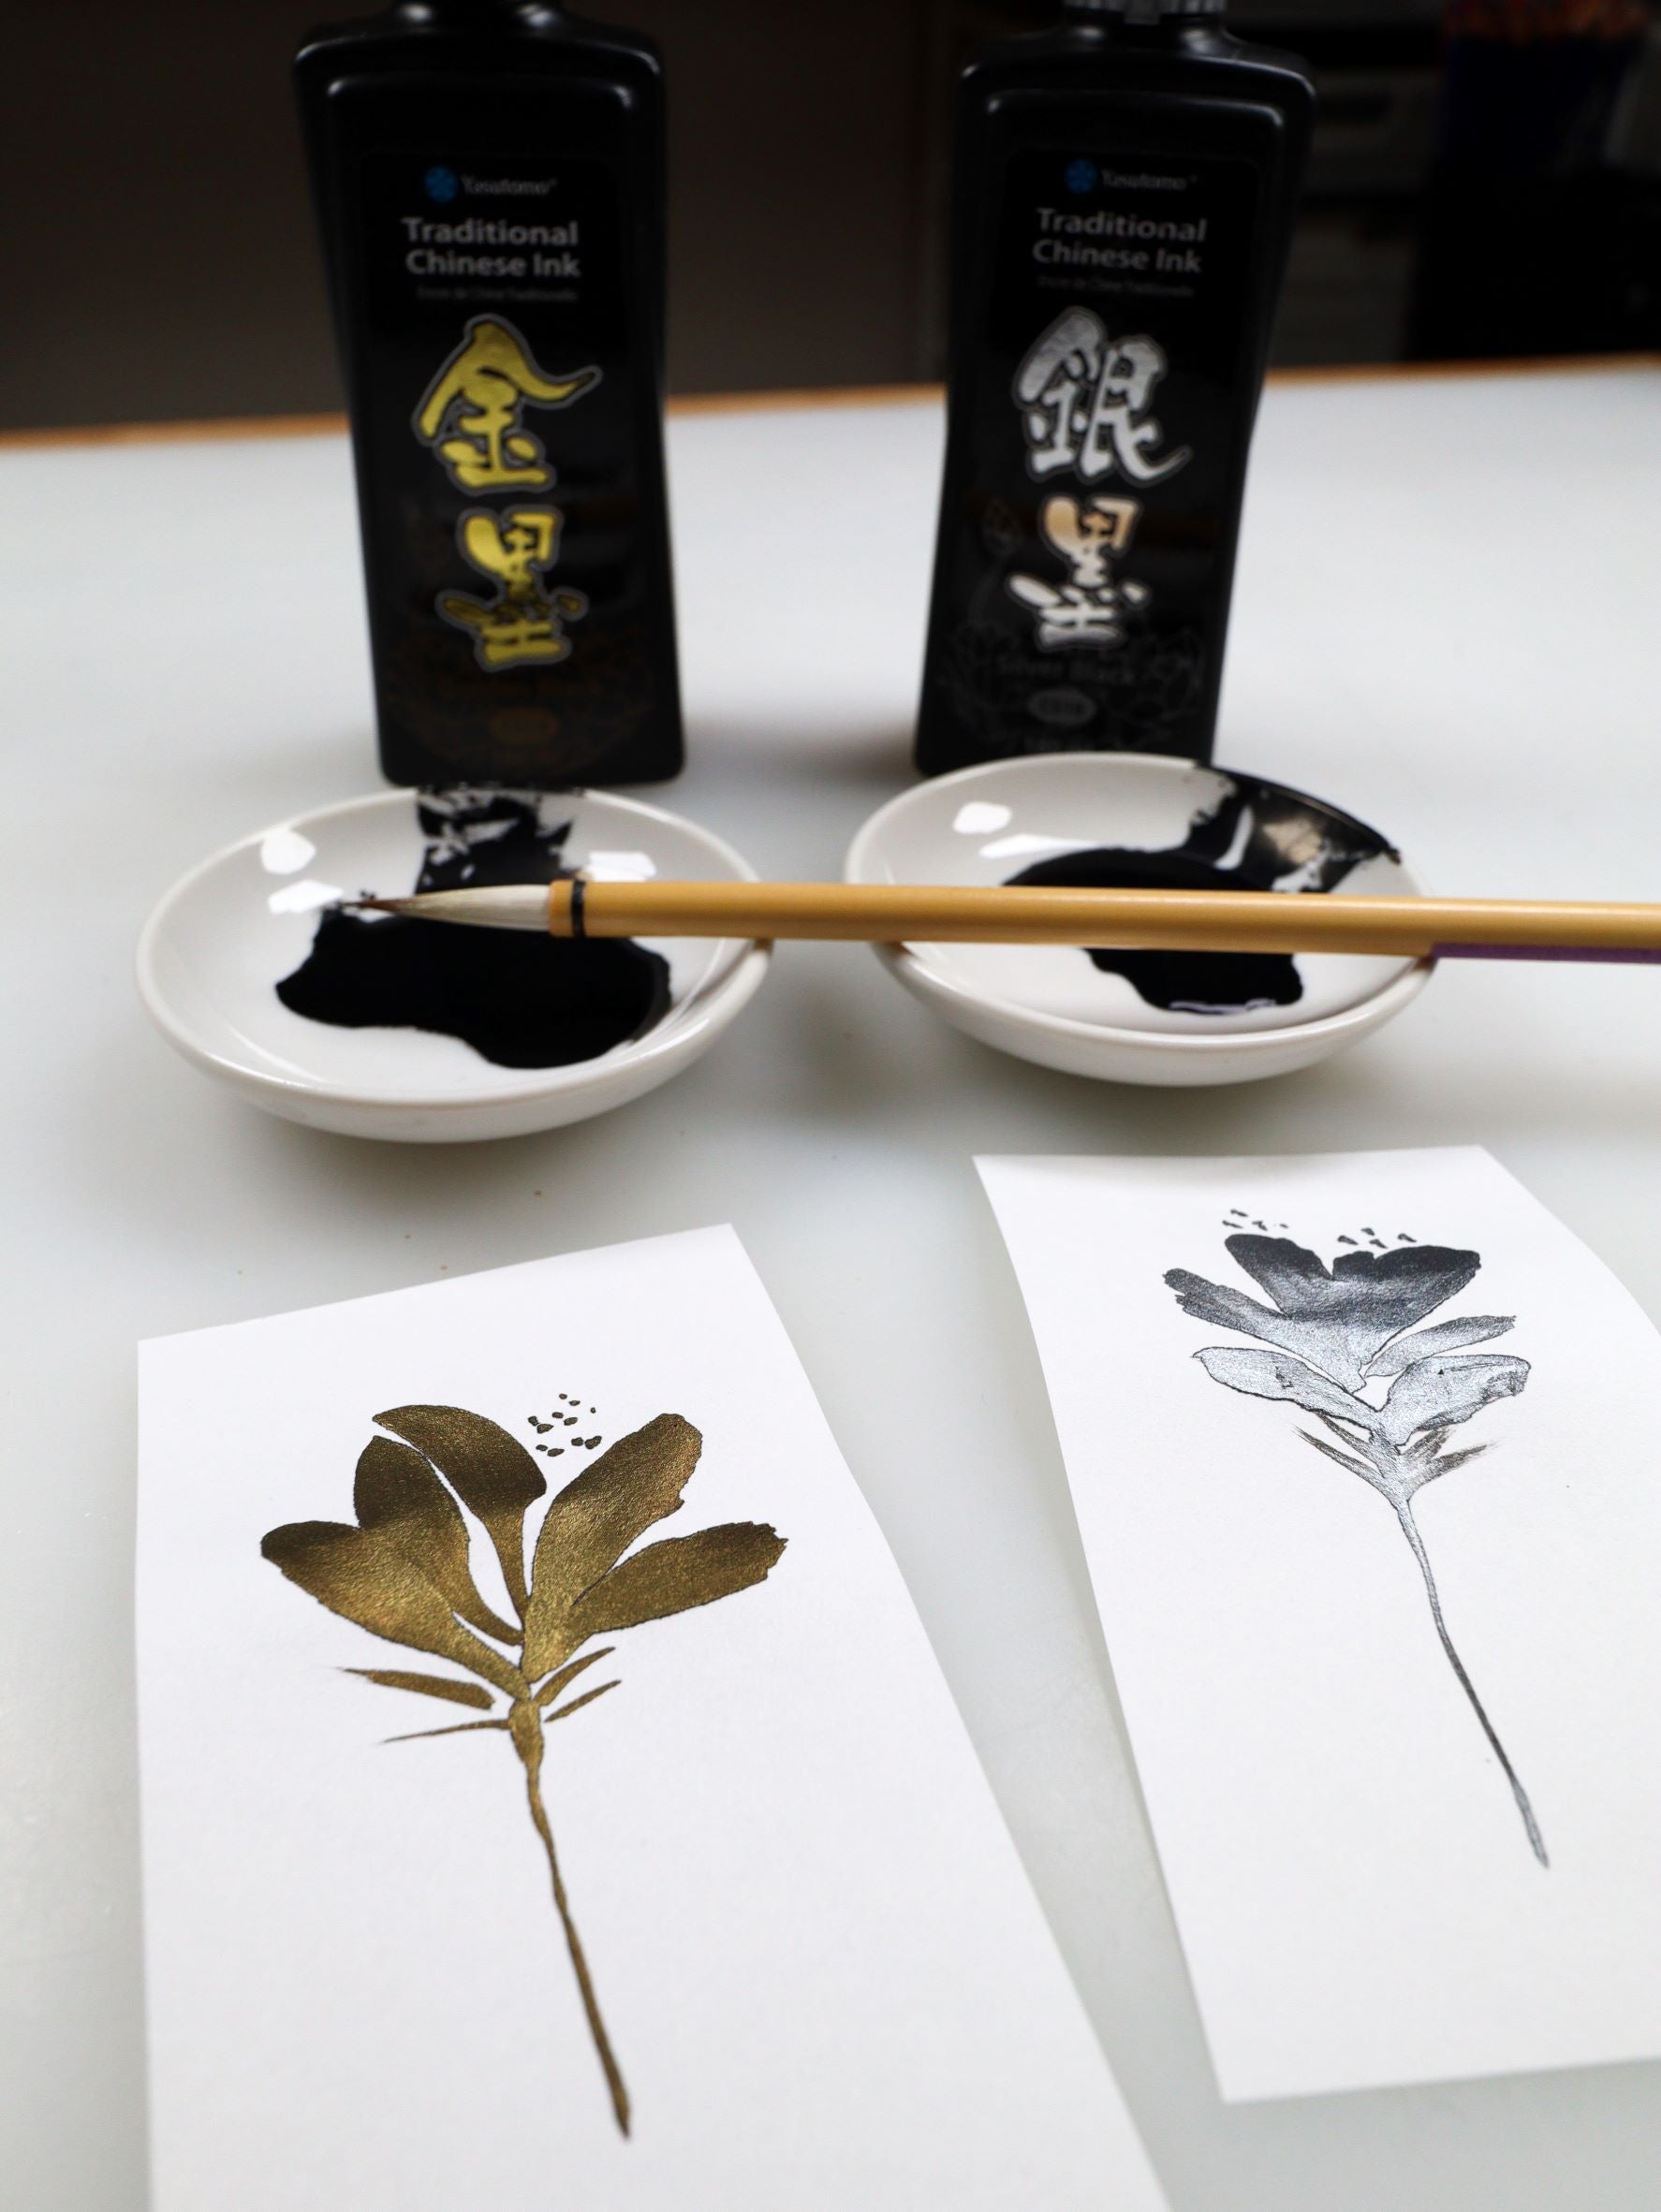 Yasutomo Ultra Black Traditional Chinese Ink